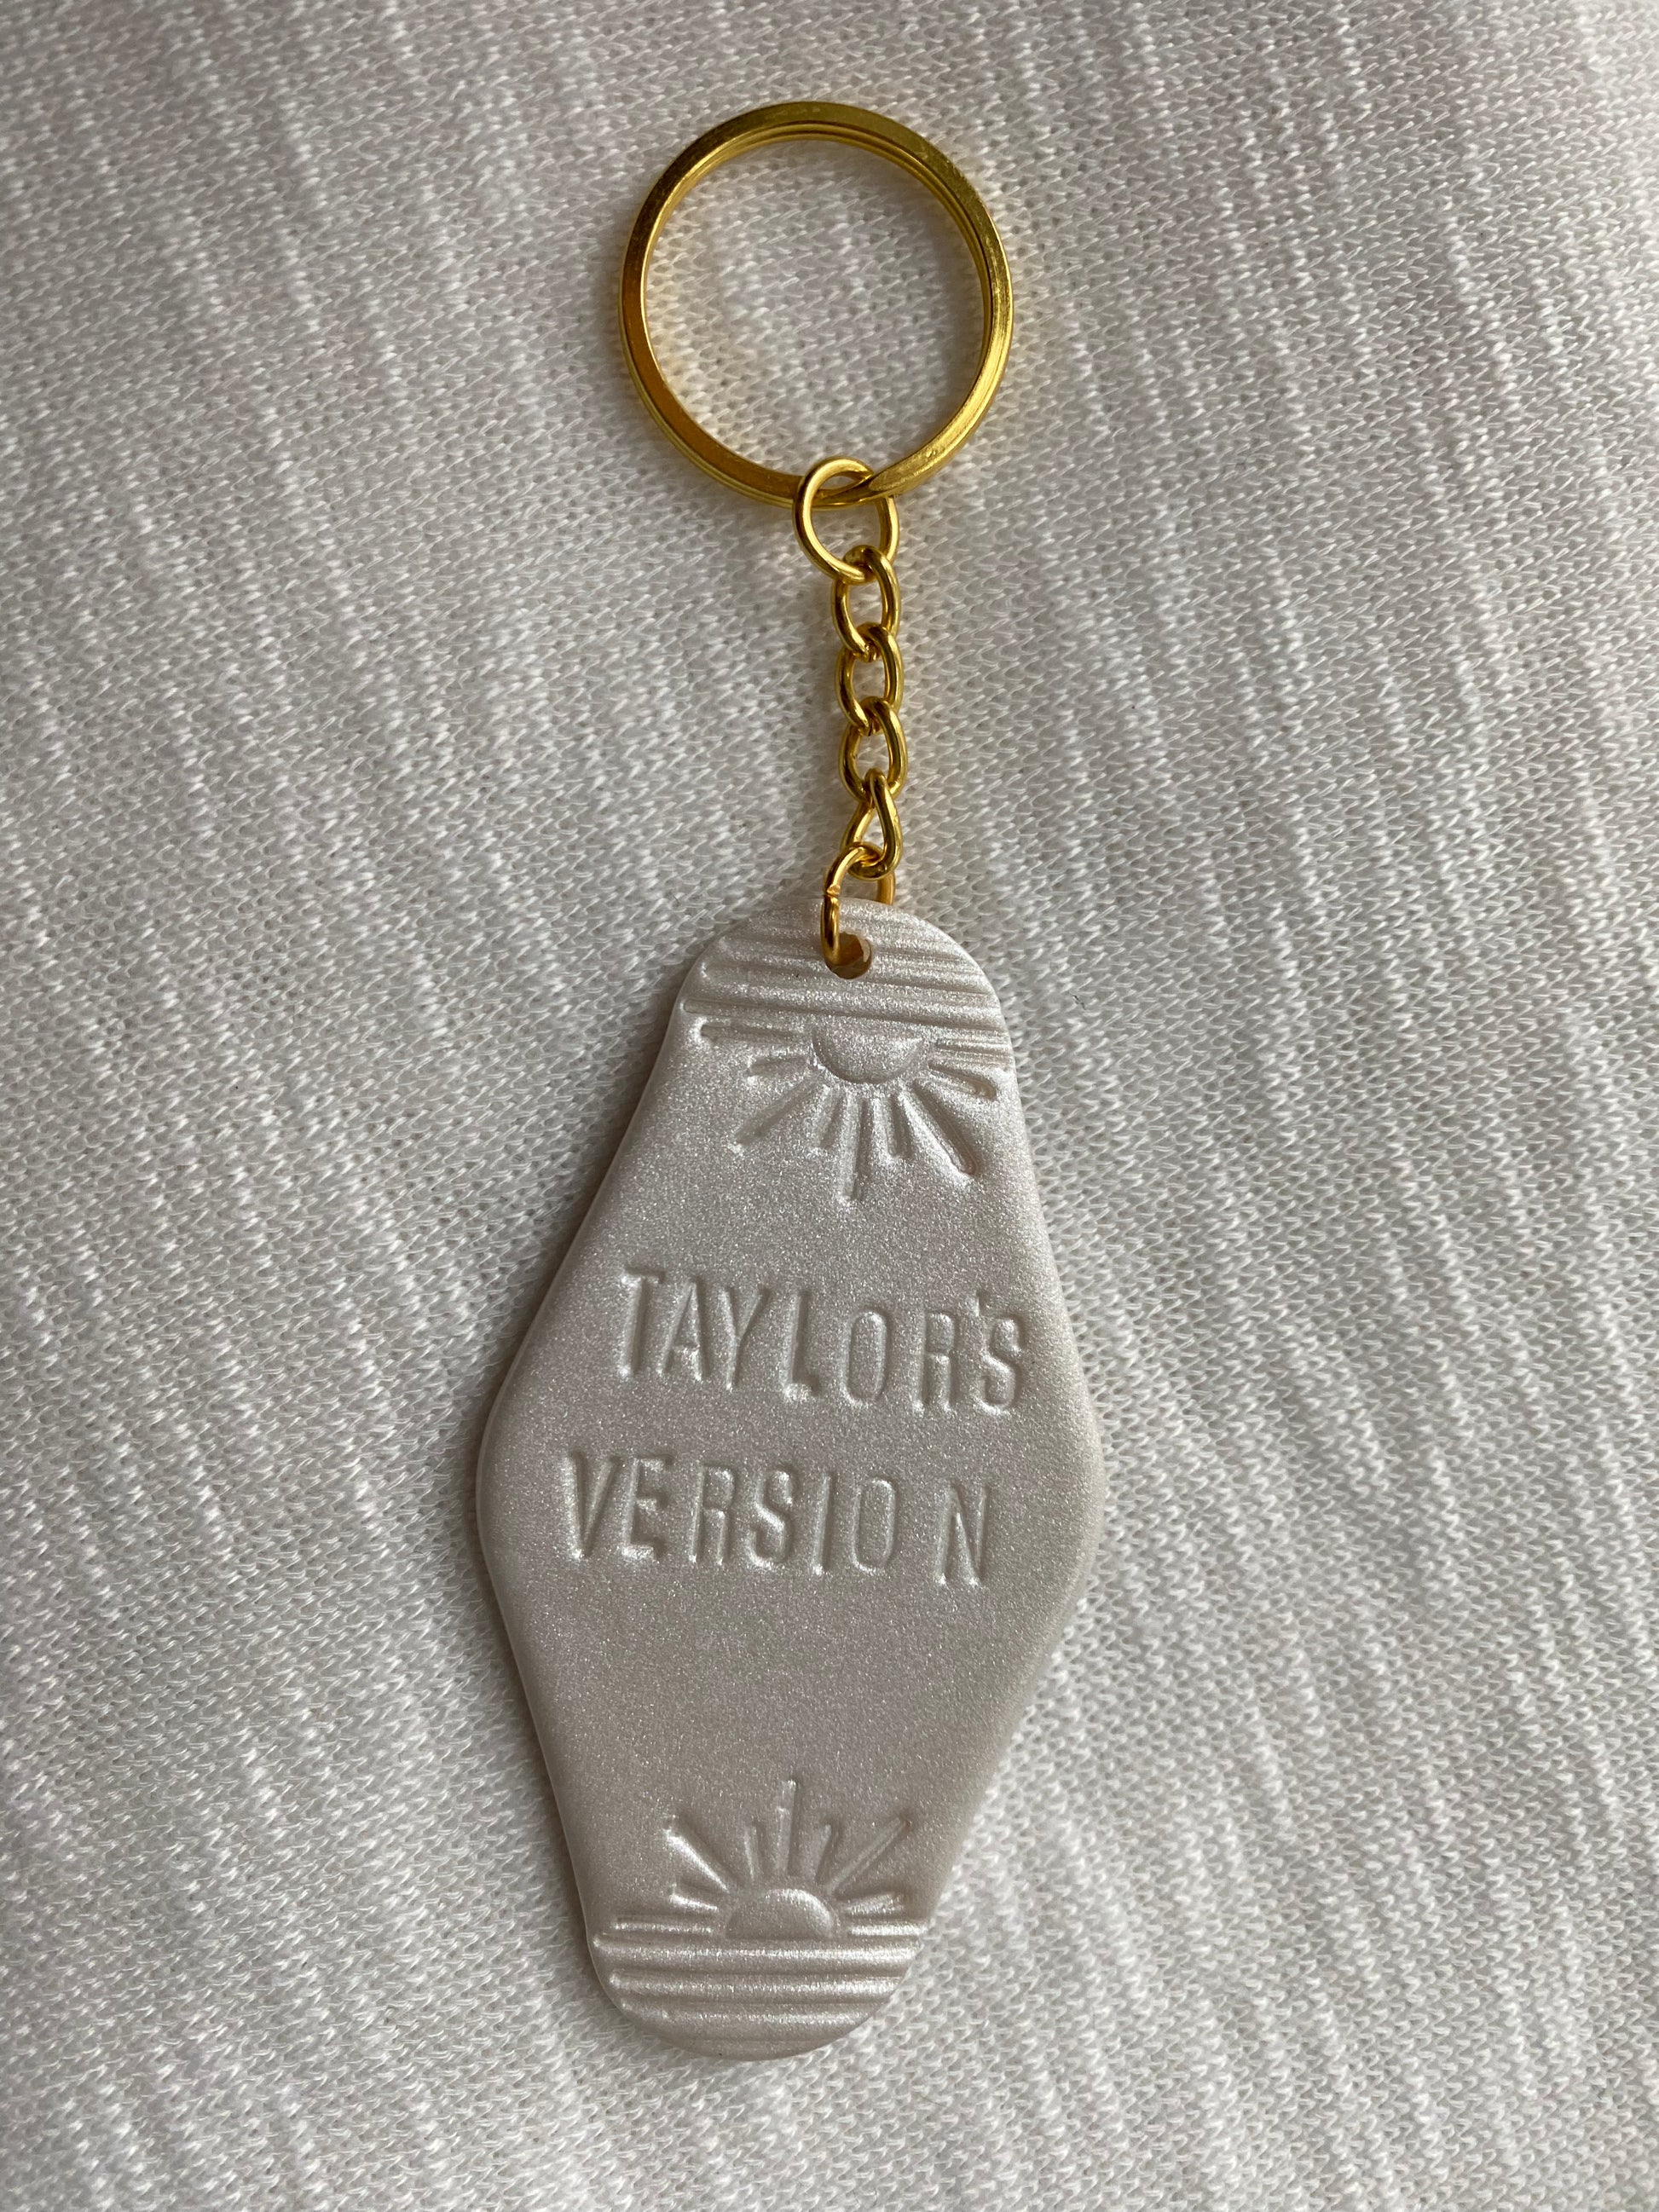 Taylor Swift Keychain - 22, Key Chains, Designer Key Chain, Angry Birds  Keychain, चाबी का छल्ला, कीचेन - Aakarshan Designs, Bhopal